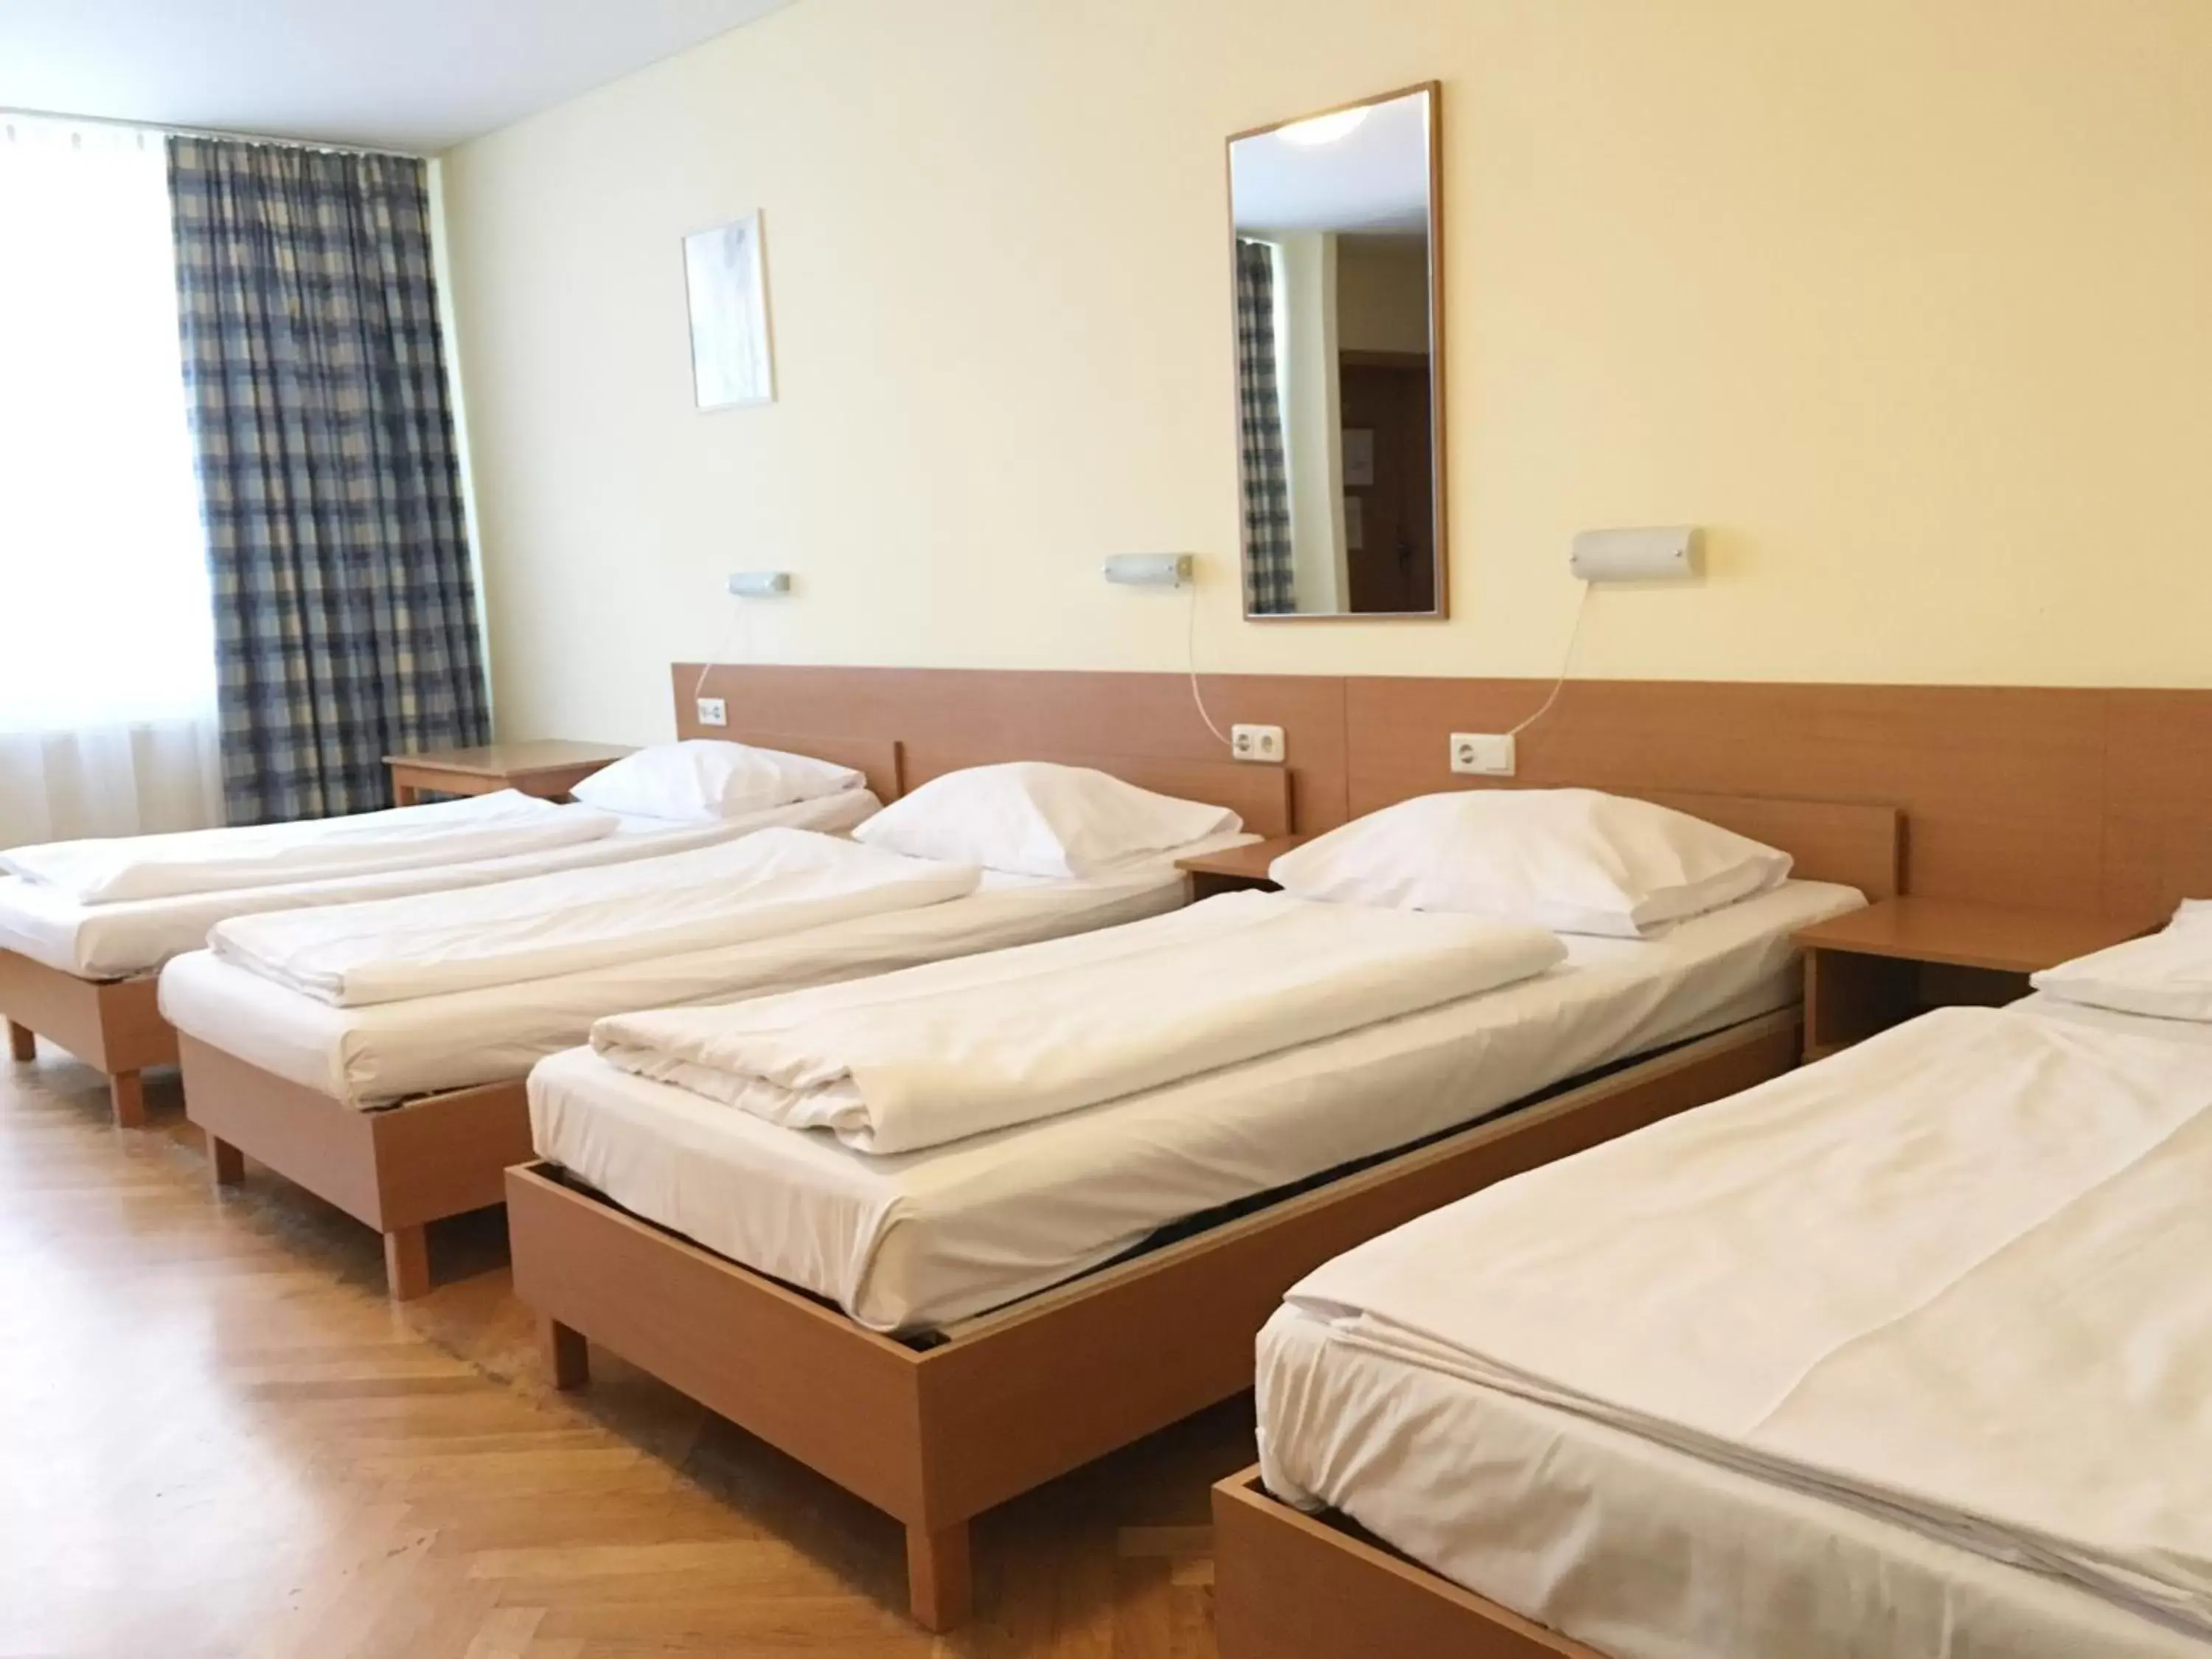 Bed, Room Photo in Hotel Geblergasse